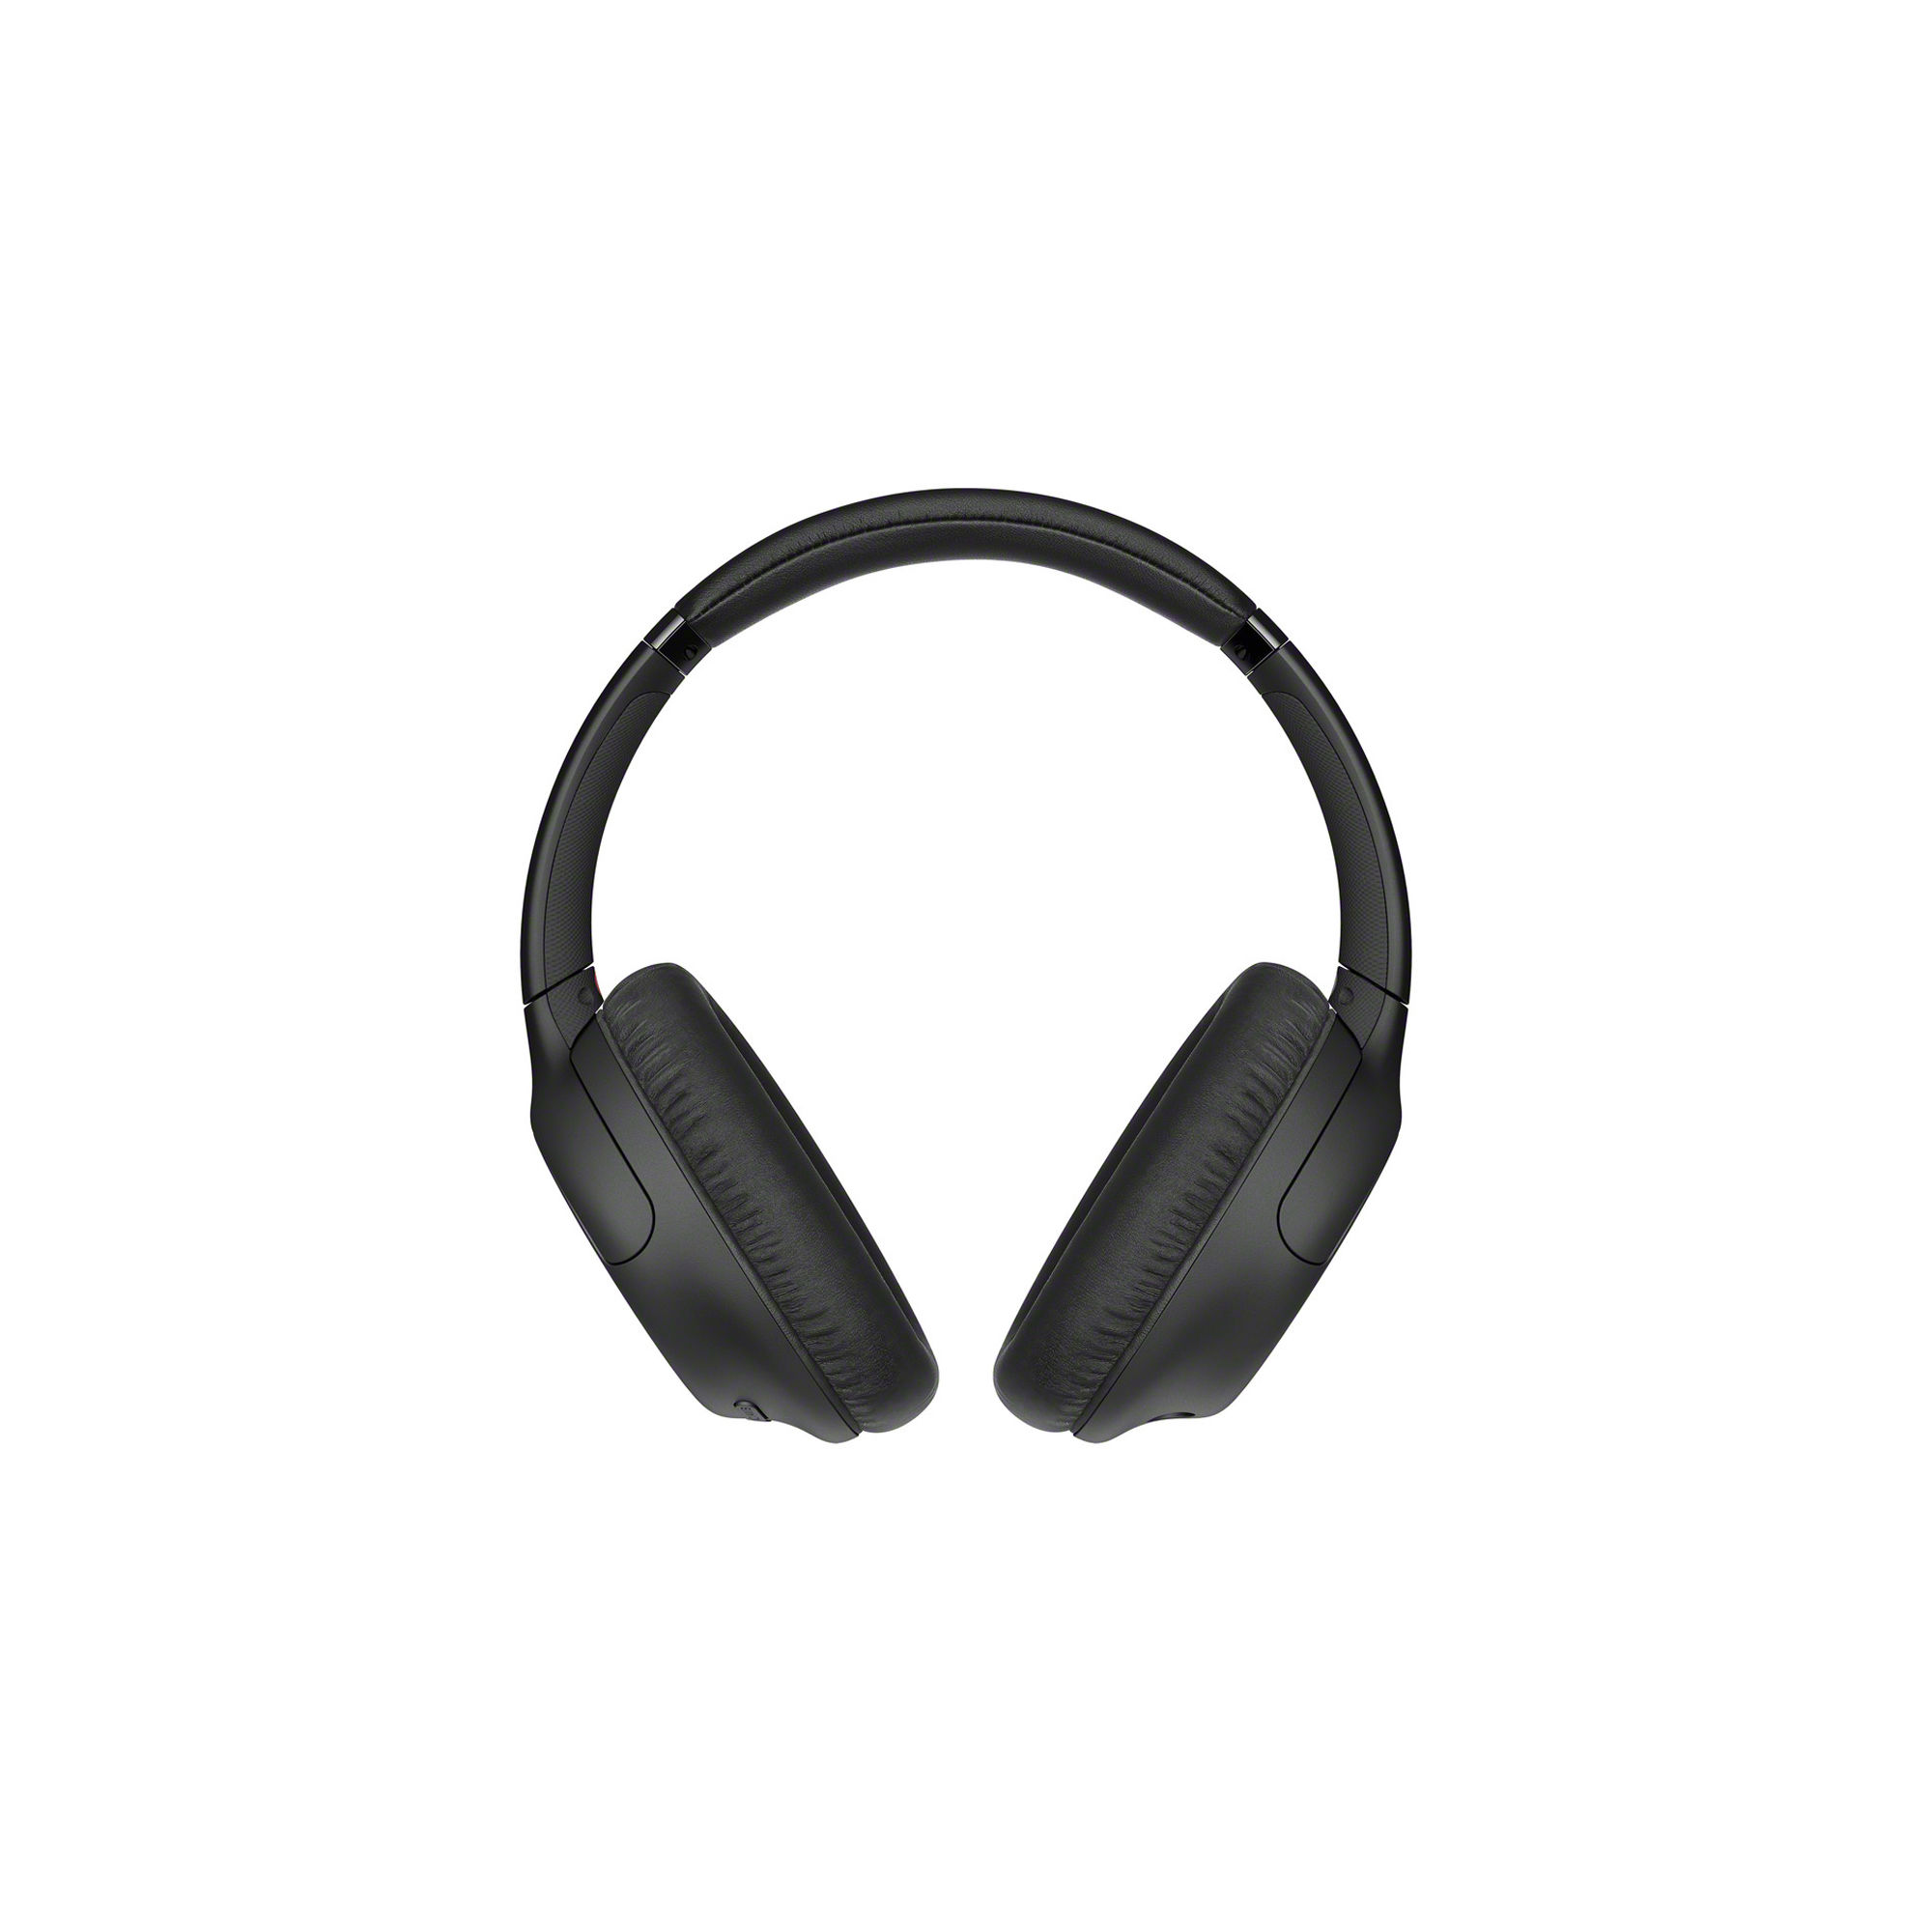 Sony WH-CH710N Noise-Canceling Wireless Over-Ear Headphones